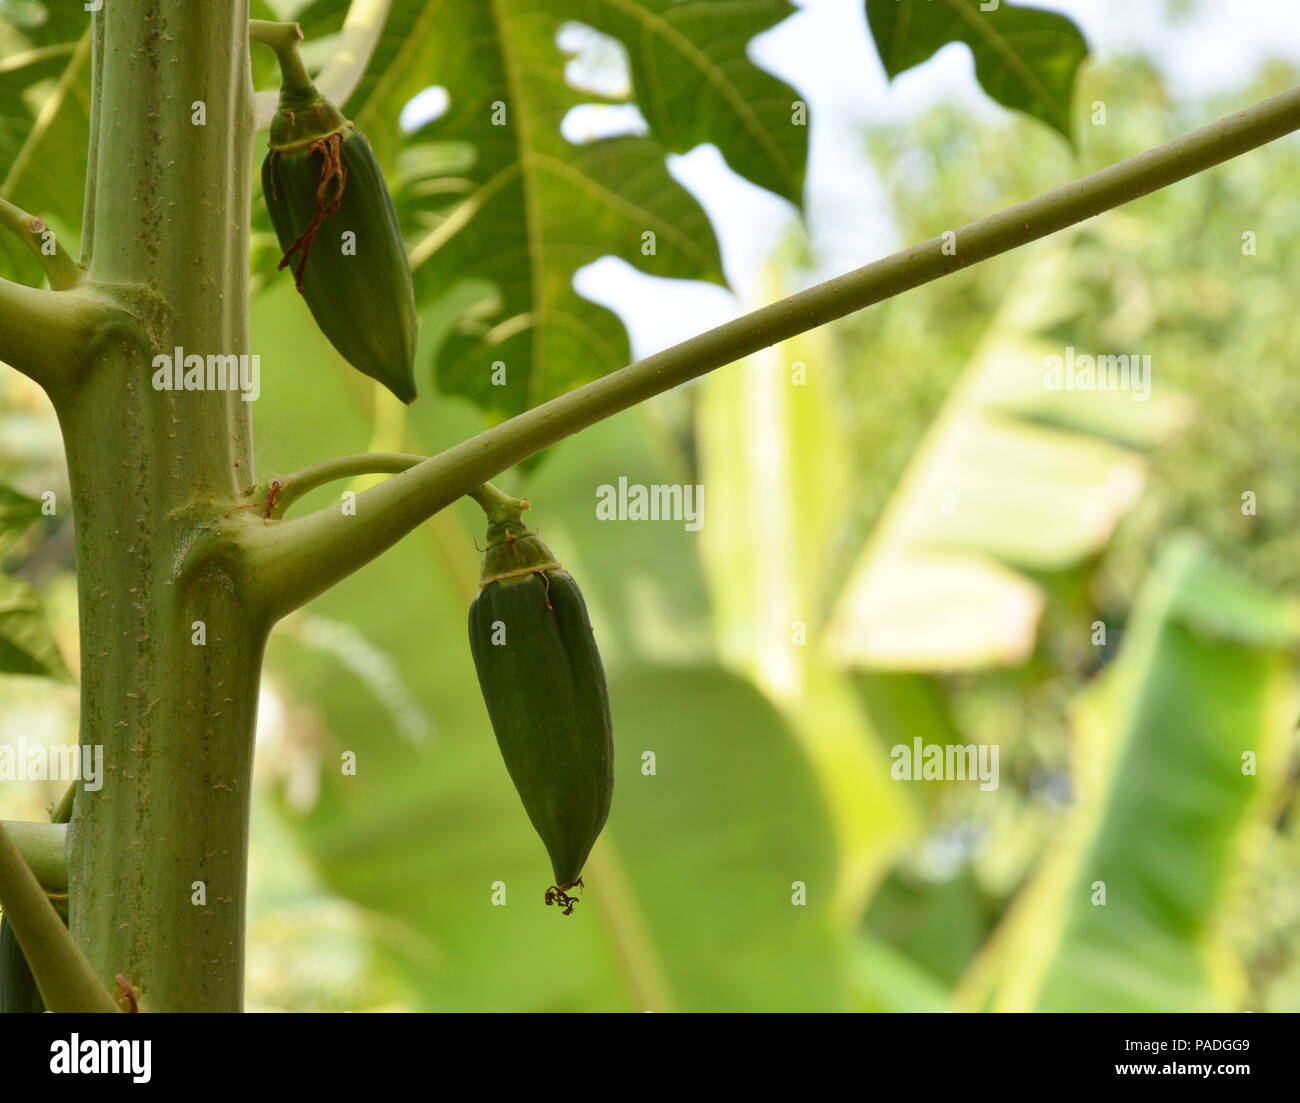 papaya on branch in garden Stock Photo